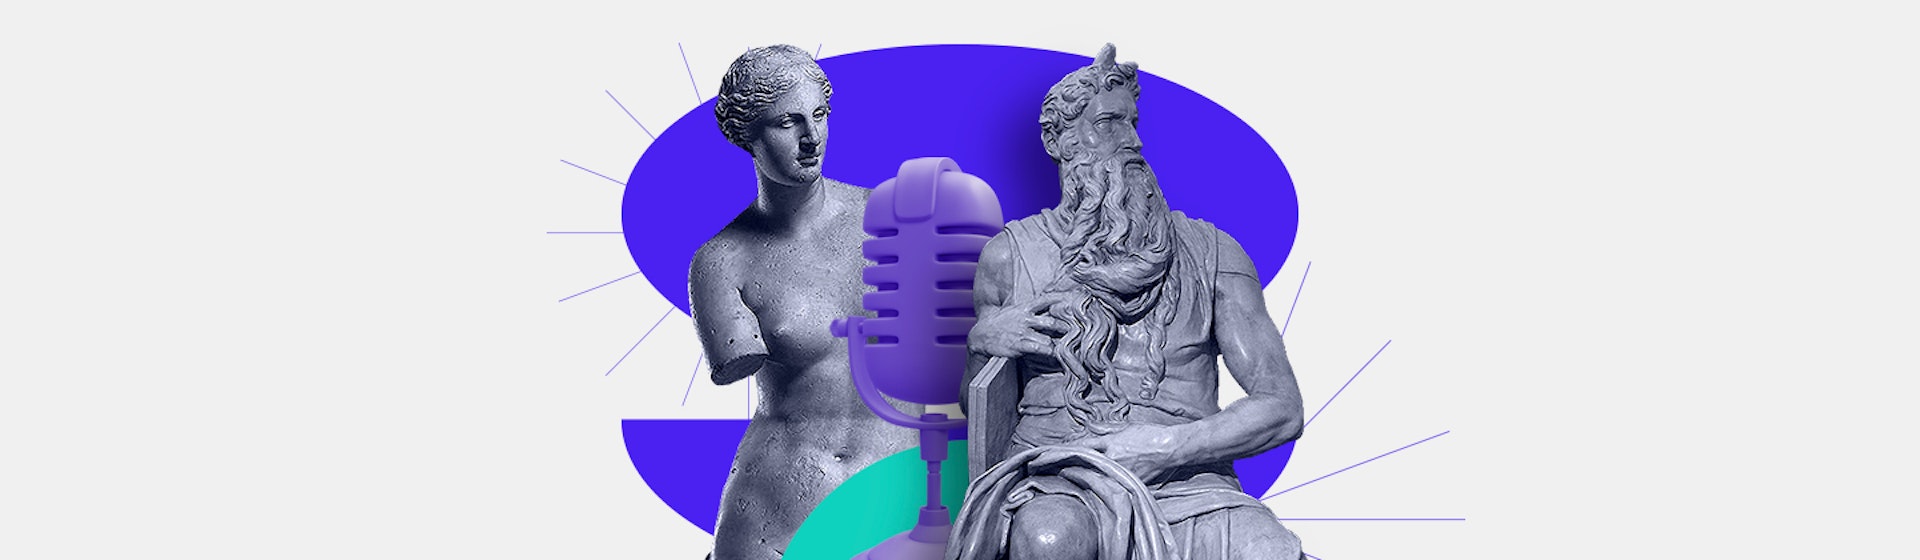 Top 10 podcast de historia: Adéntrate en relatos históricos increíbles narrados por expertos